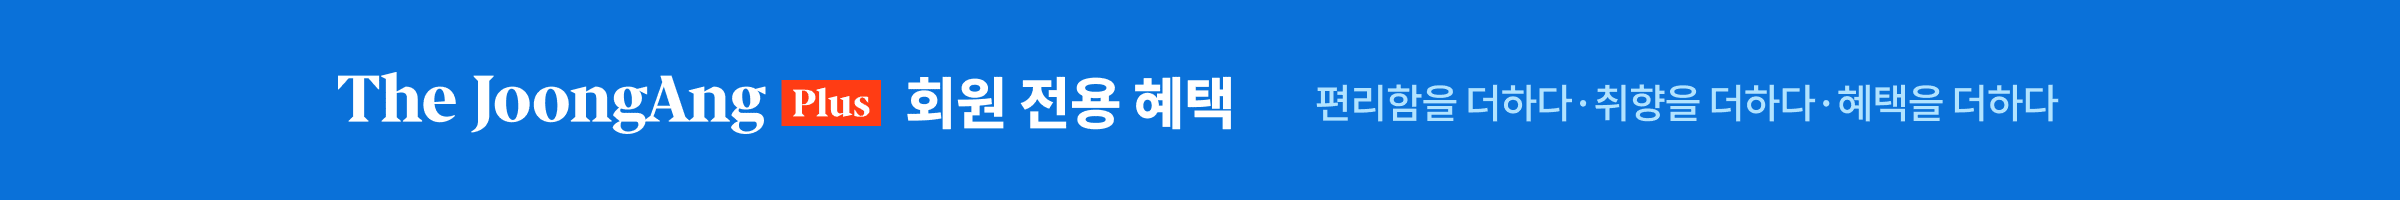 The JoongAng Plus 회원 전용 혜택 - 편리함을 더하다. 취향을 더하다. 혜택을 더하다.